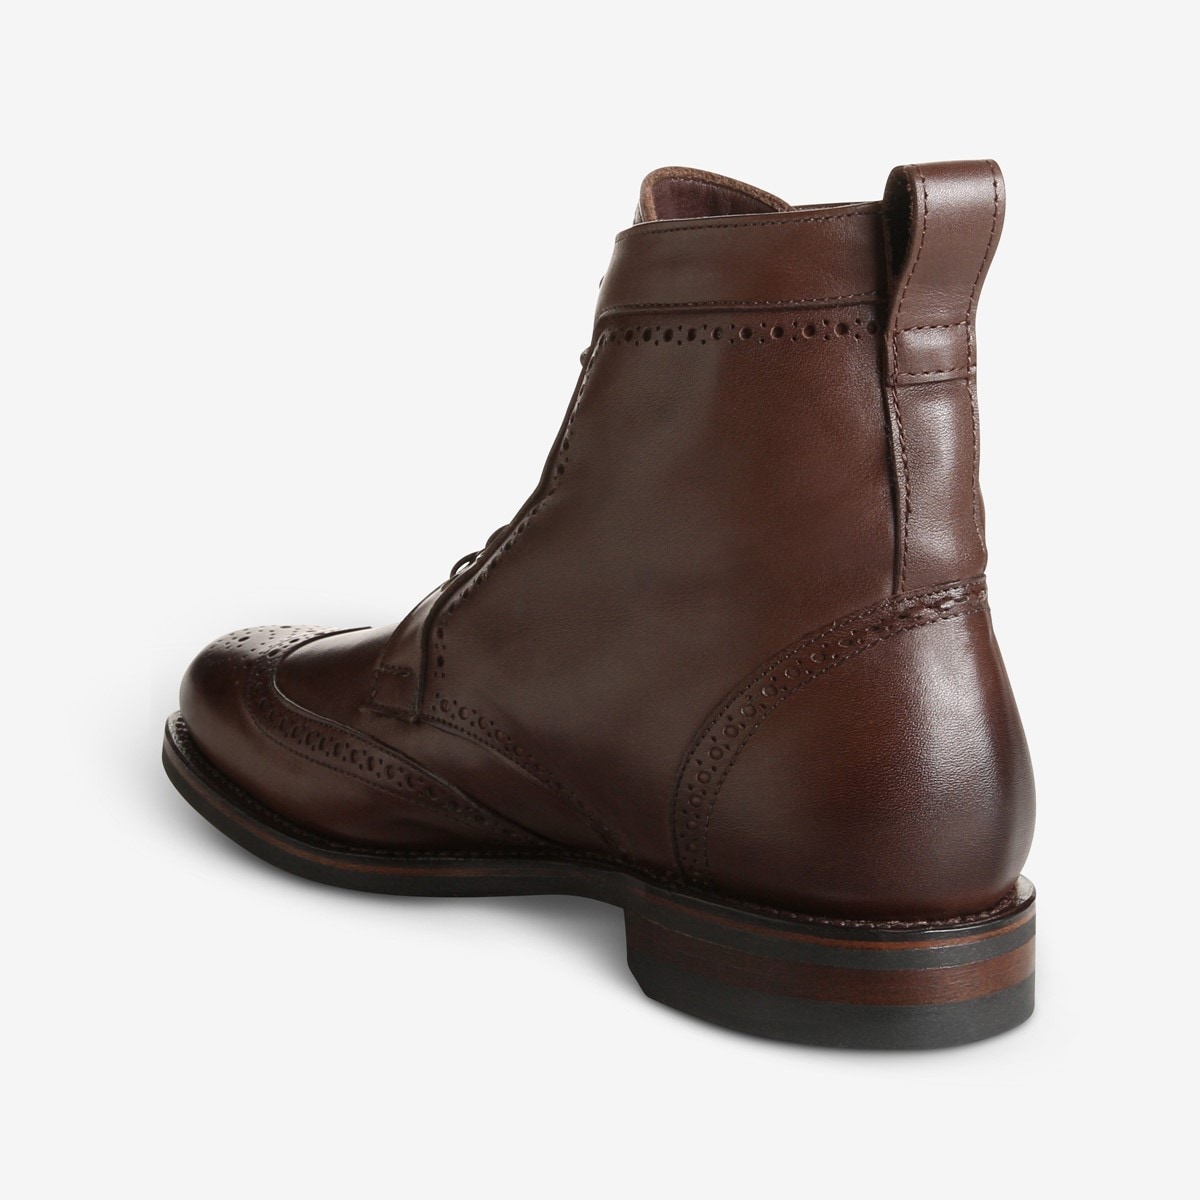 Dalton Weatherproof Dress Boot with Dainite Rubber Sole | Men's Boots |  Allen Edmonds